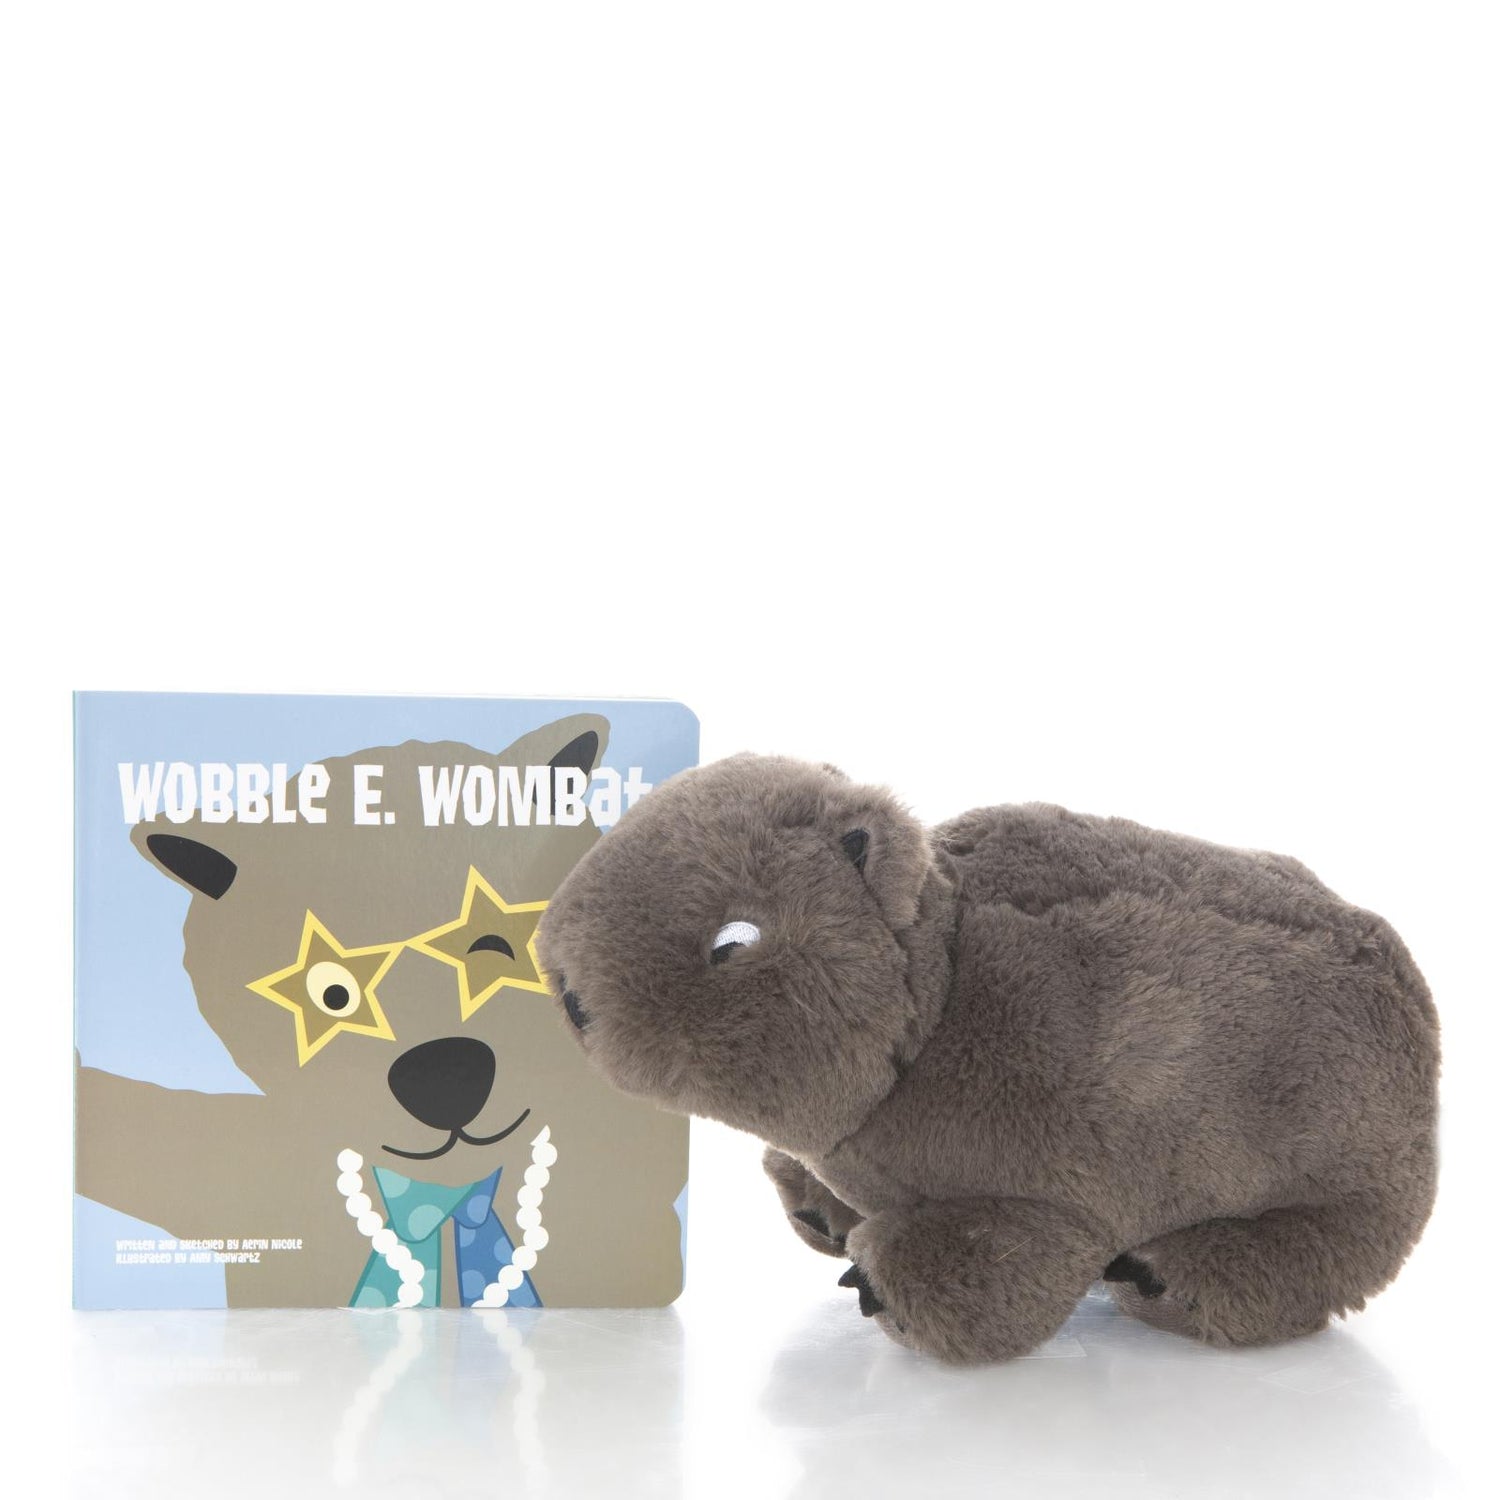 Book & Plush Combo in Wobble E. Wombat with Wobble E. Wombat Plush